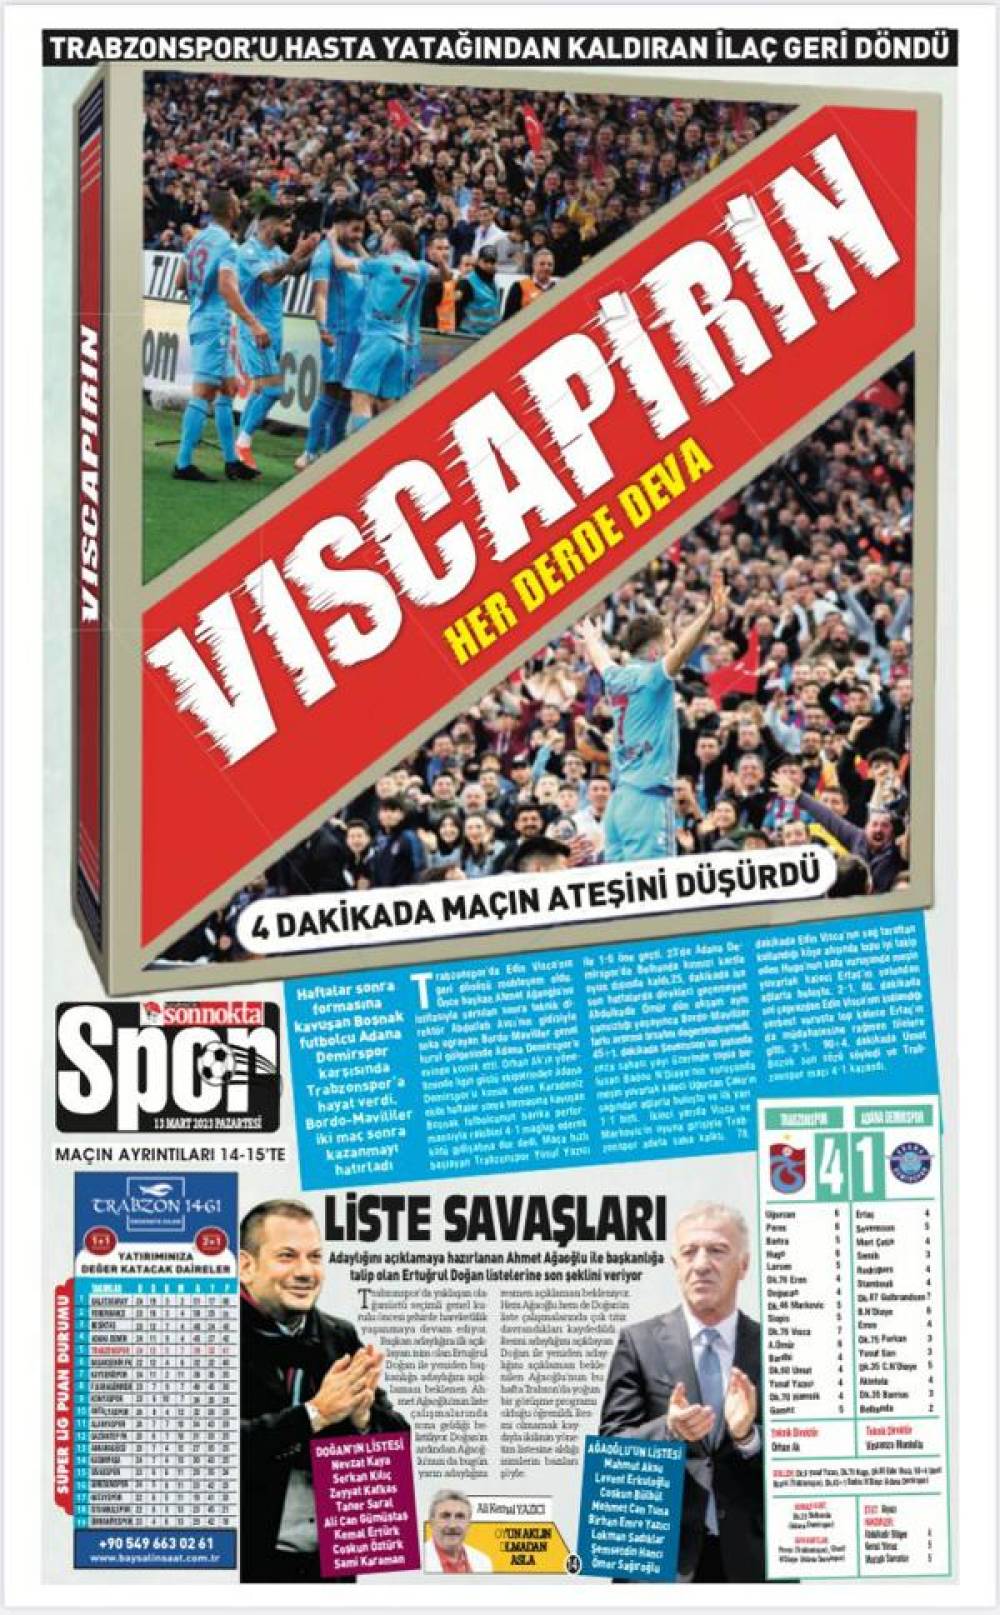 Visca'nın dönüşü Trabzonspor'a ilaç oldu